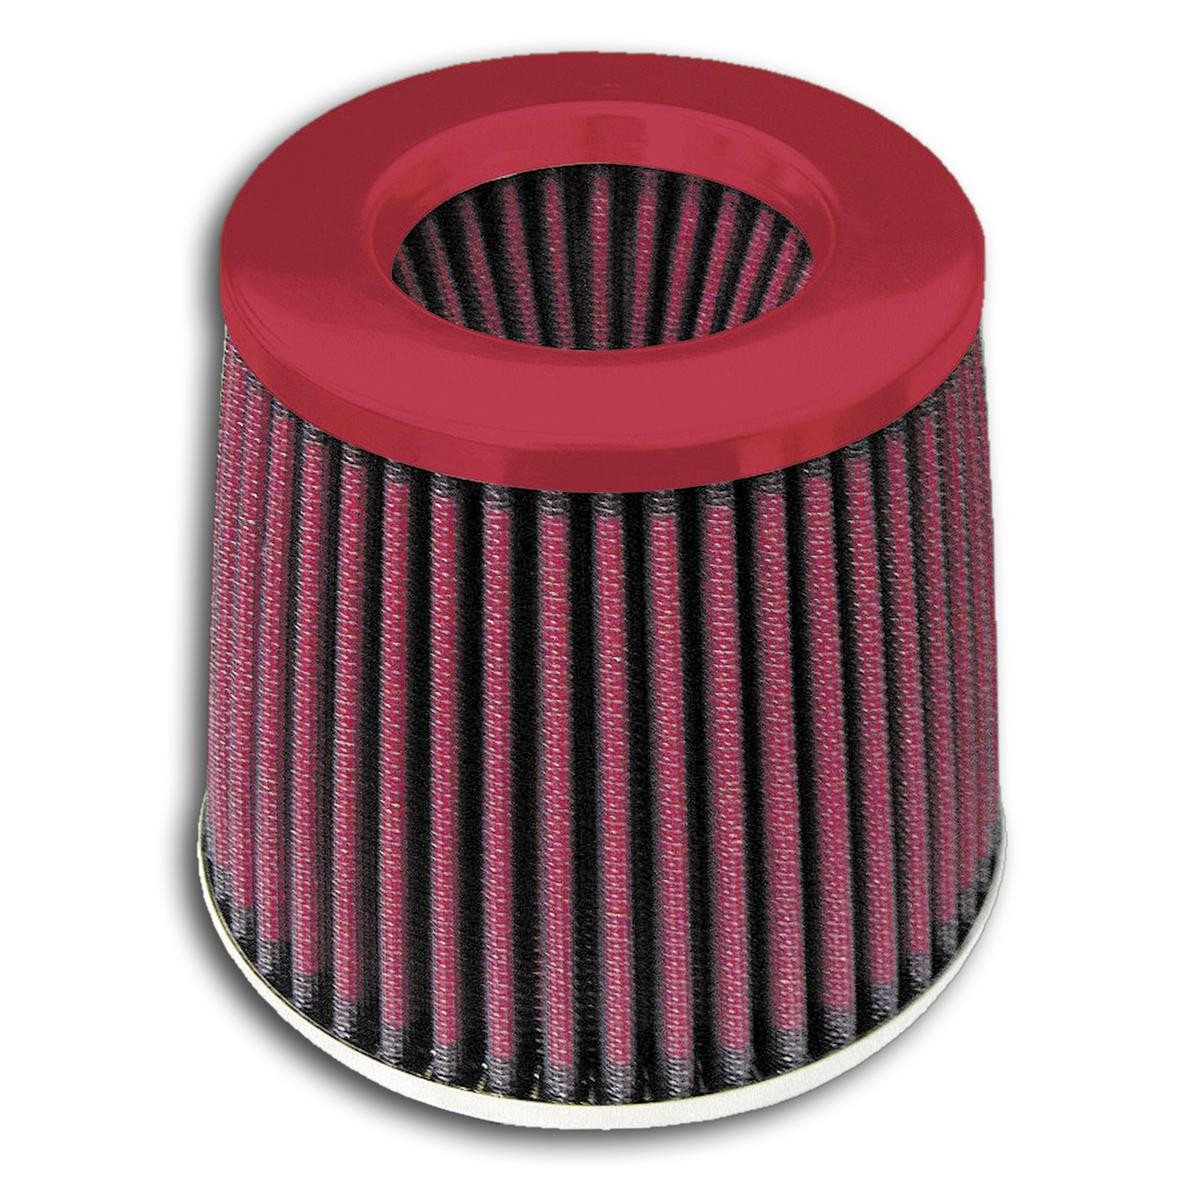 JOM Sportowy filtr powietrza 60, 70, 76, 84, 90[mm] 40301R TGB Motorower Duże skutery